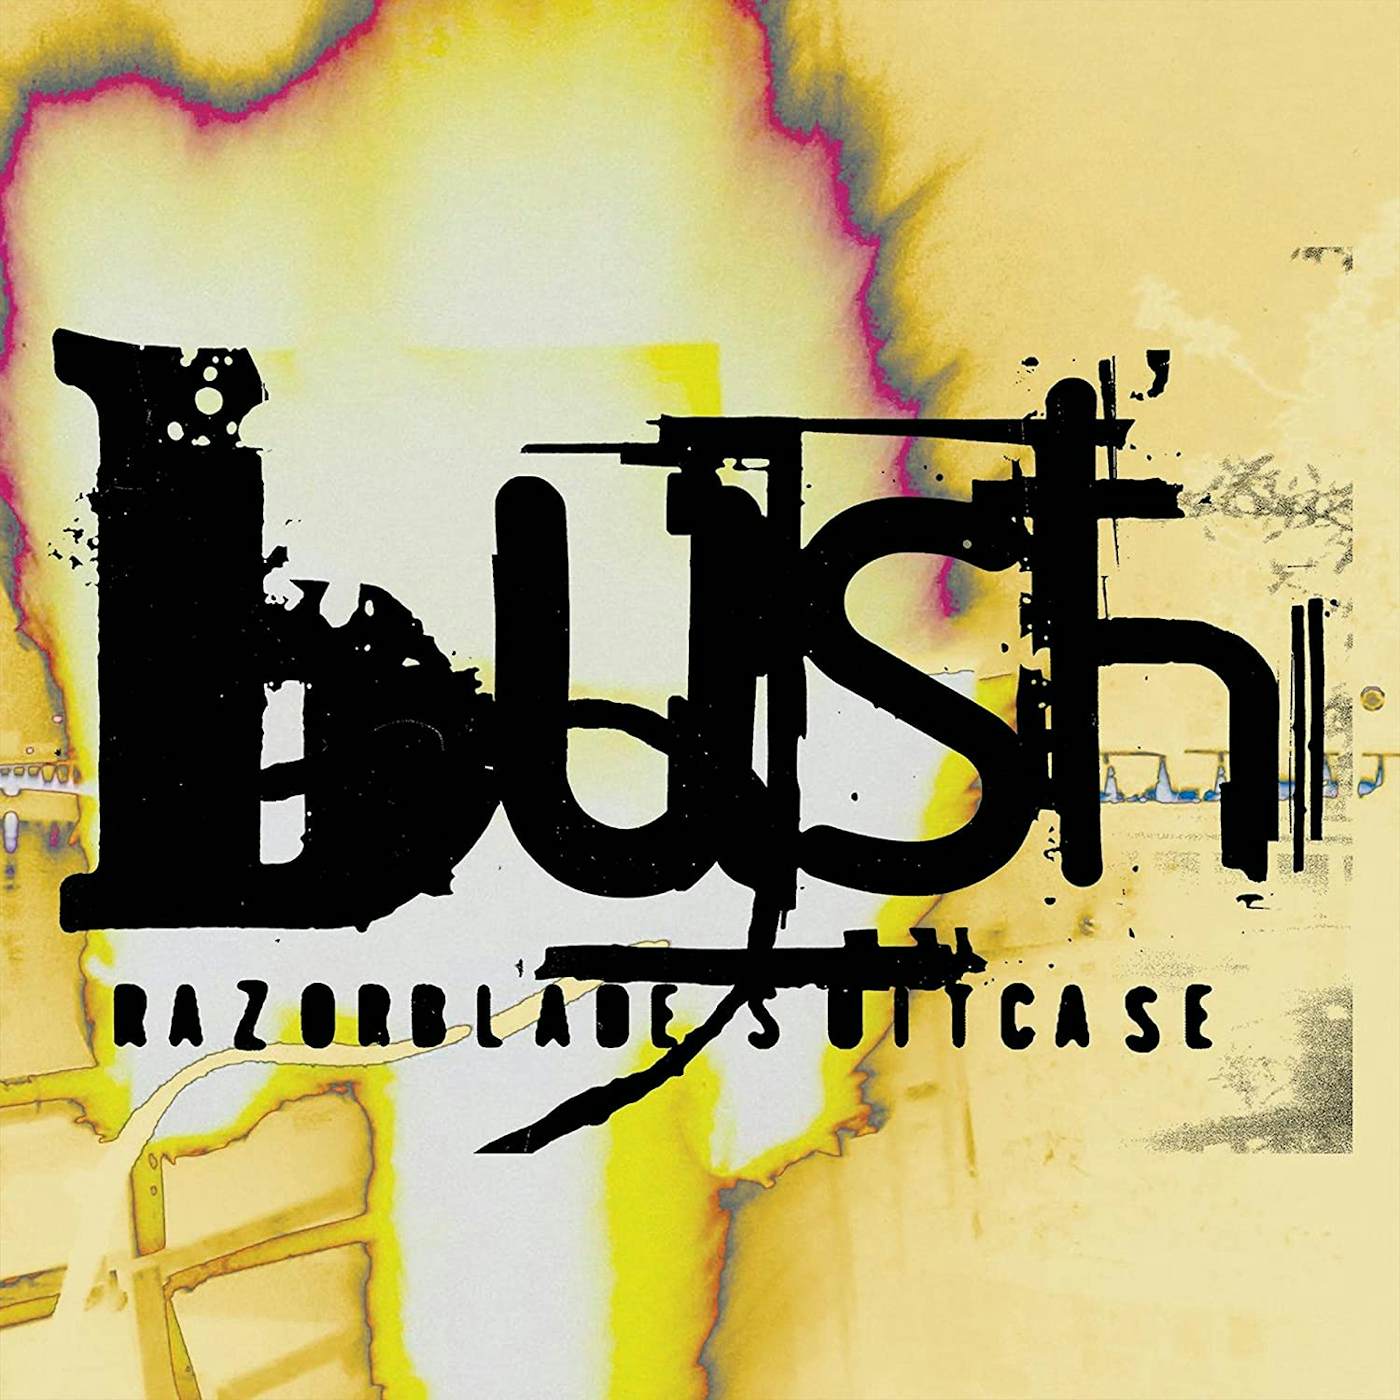 Bush Razorblade Suitcase (In Addition) Vinyl Record